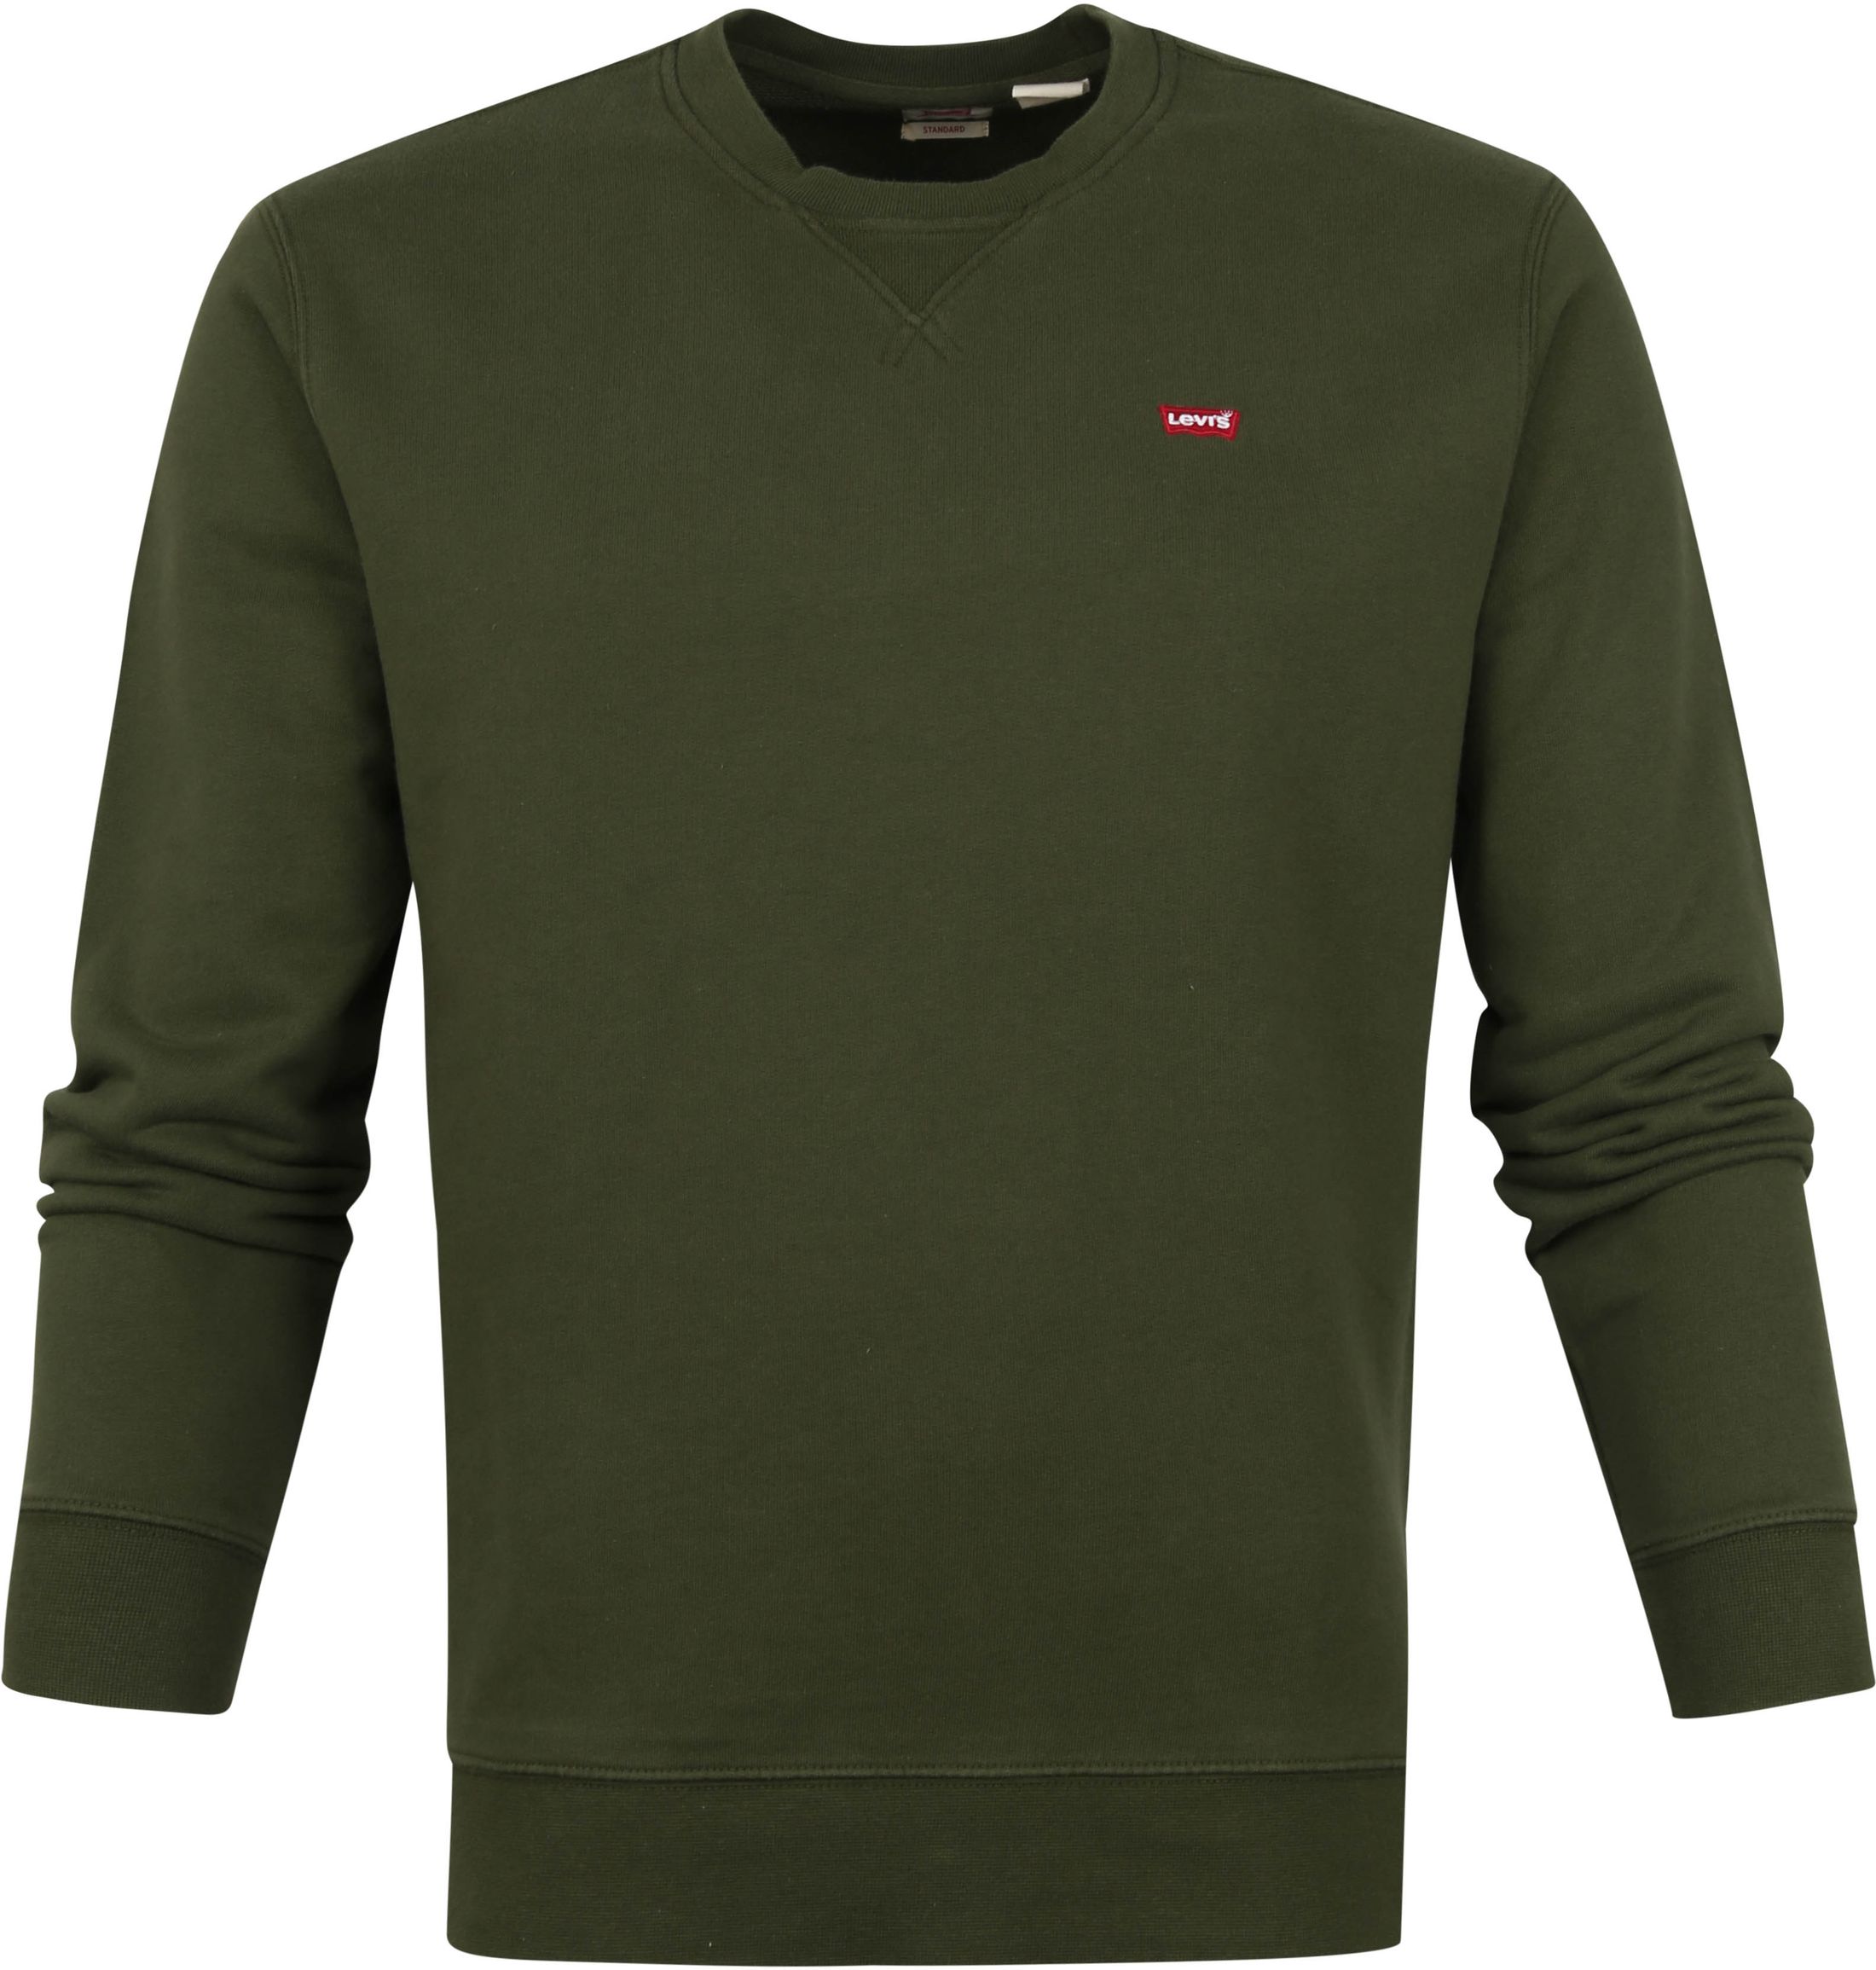 Levi's Original Sweater Green Dark Green size M